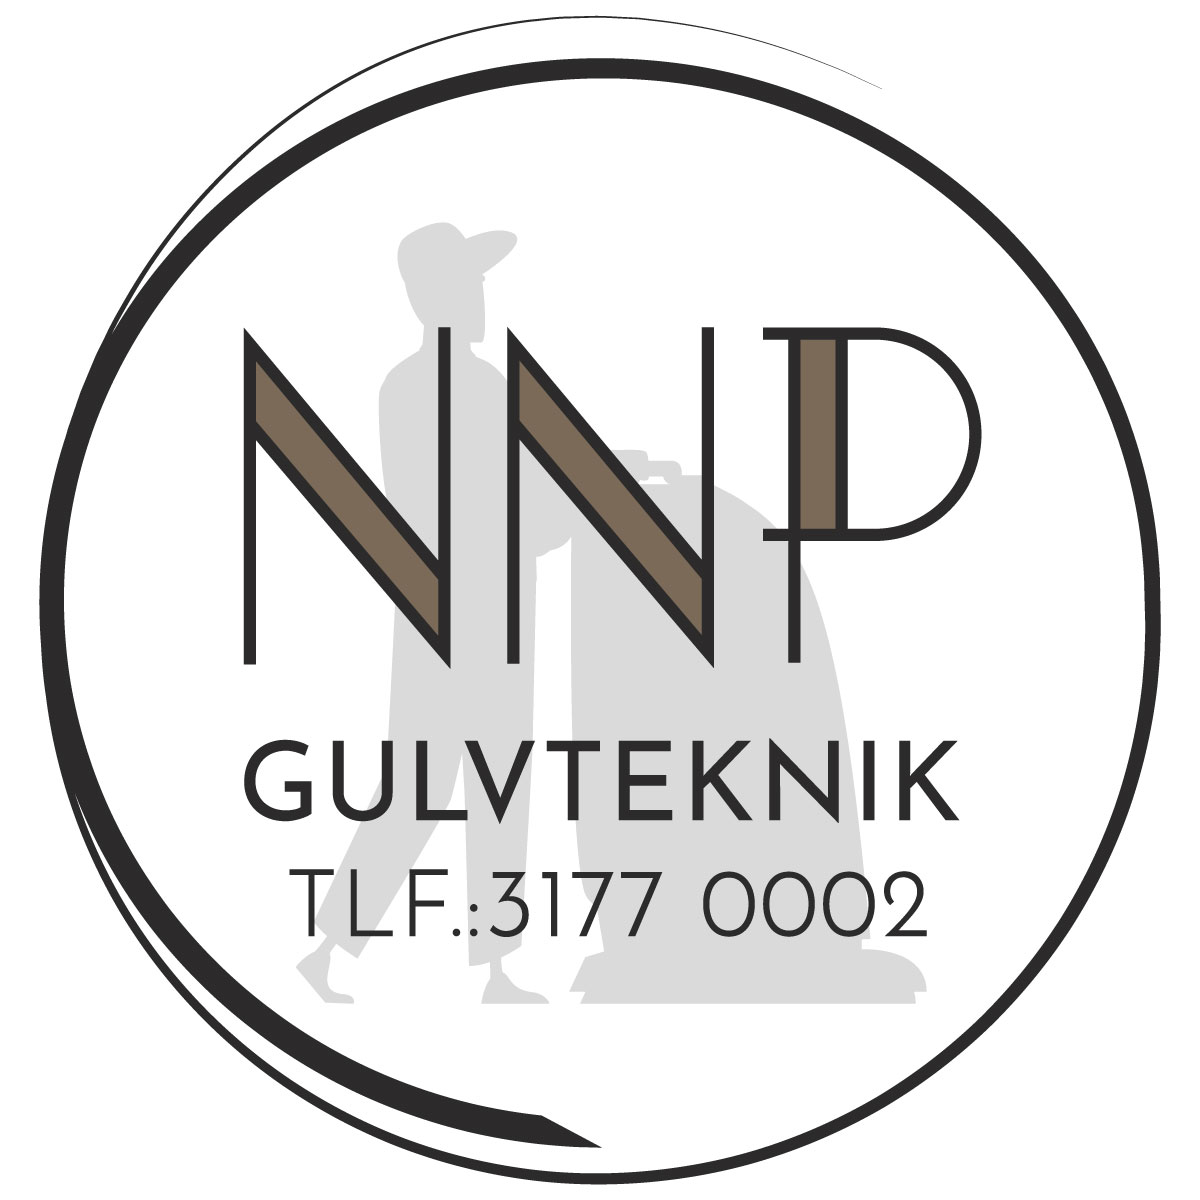 NNP Gulvteknik I/S